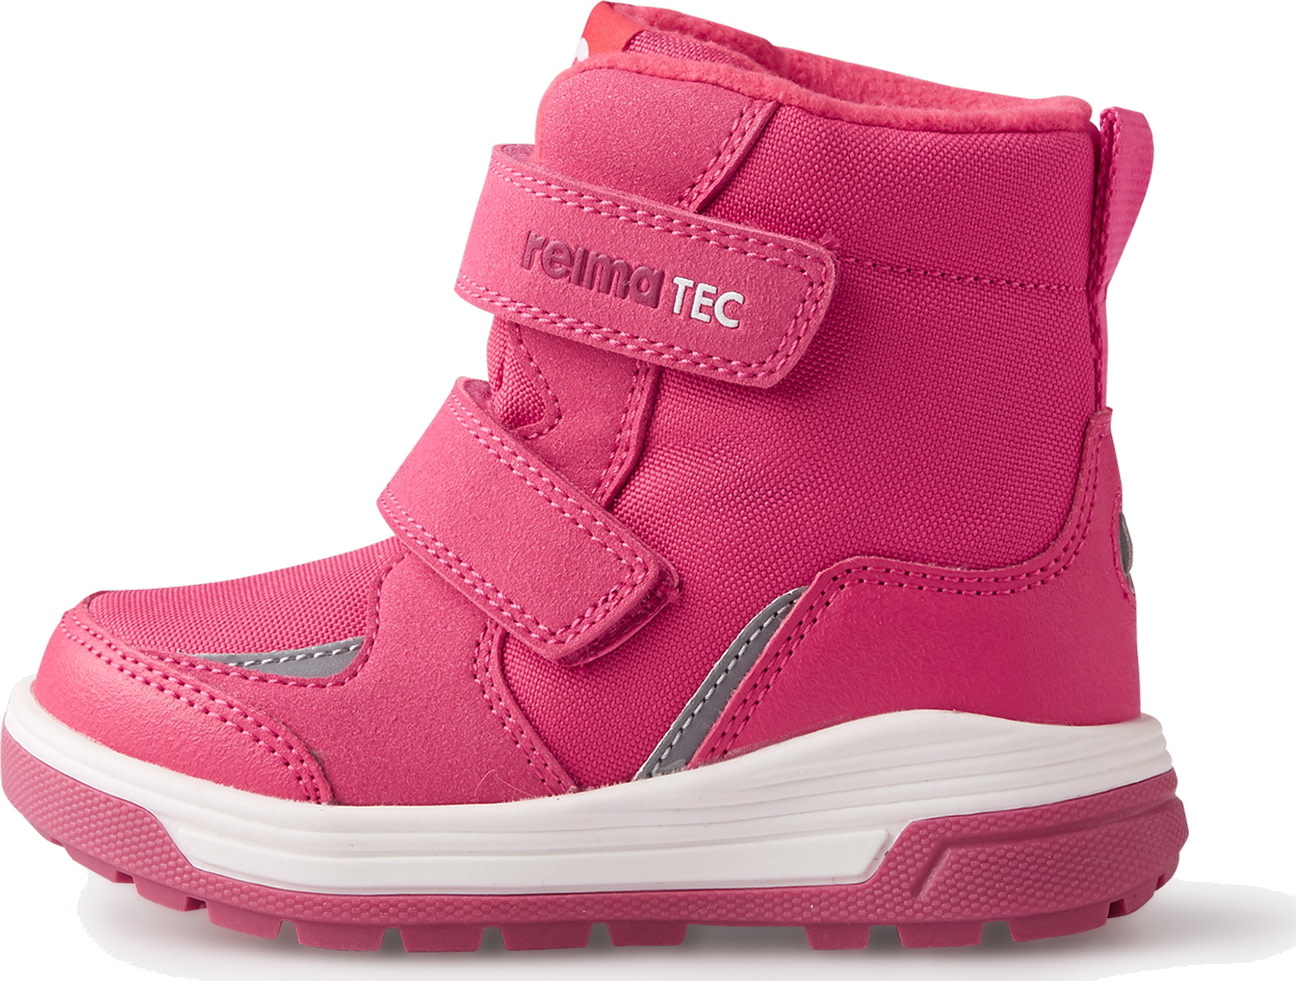 Kids’ Reimatec Shoes Qing Azalea pink 3530